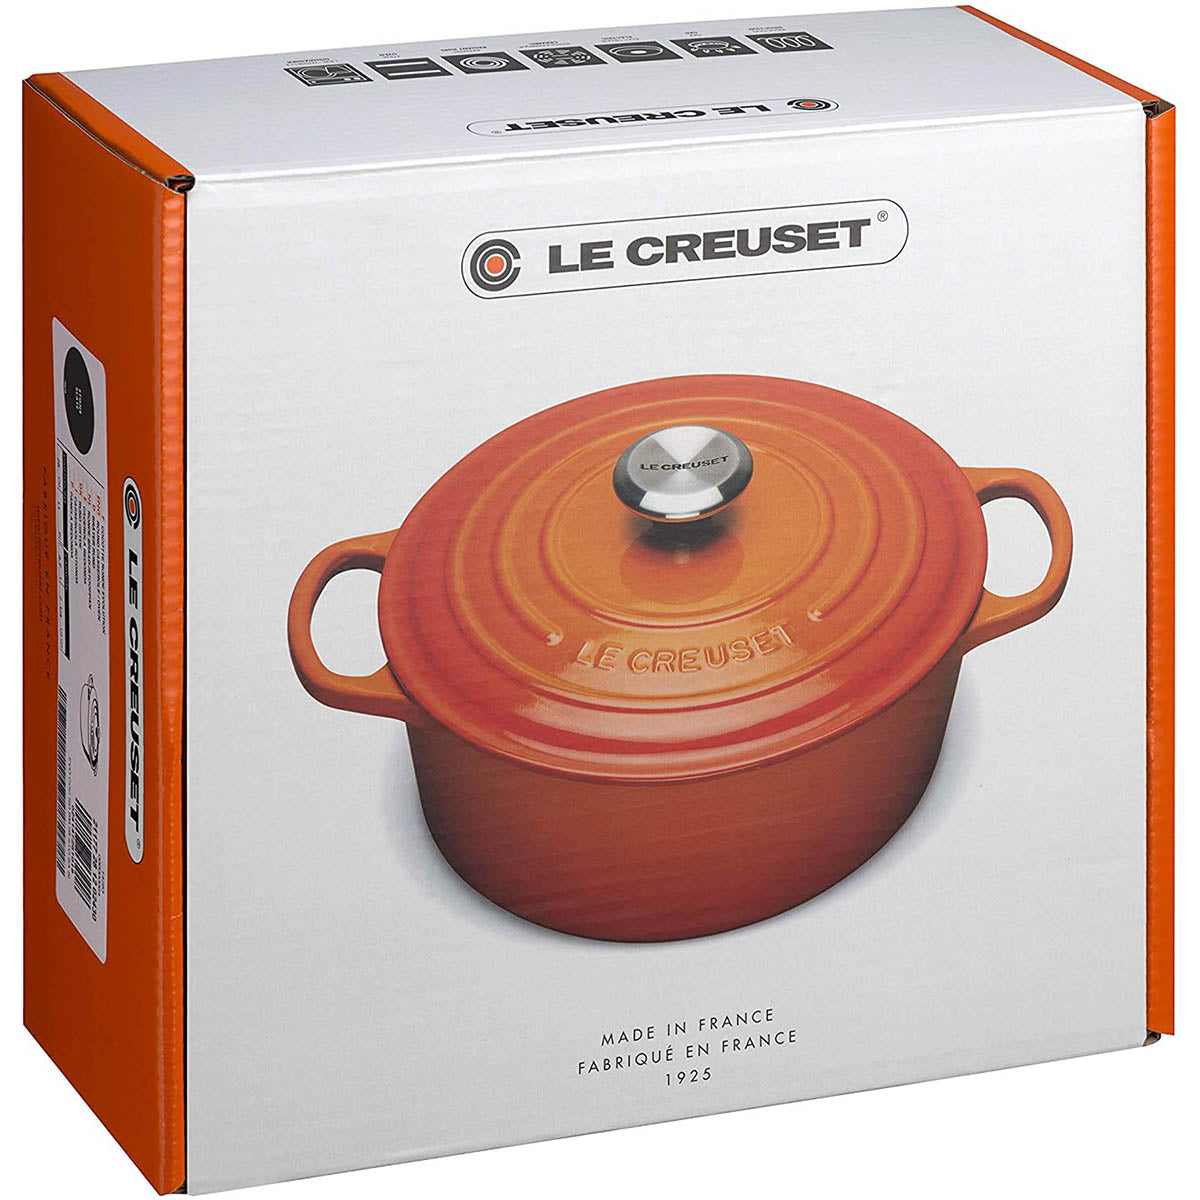 Le Creuset 3.5-Quart Signature Cast Iron Round Dutch Oven - Flame